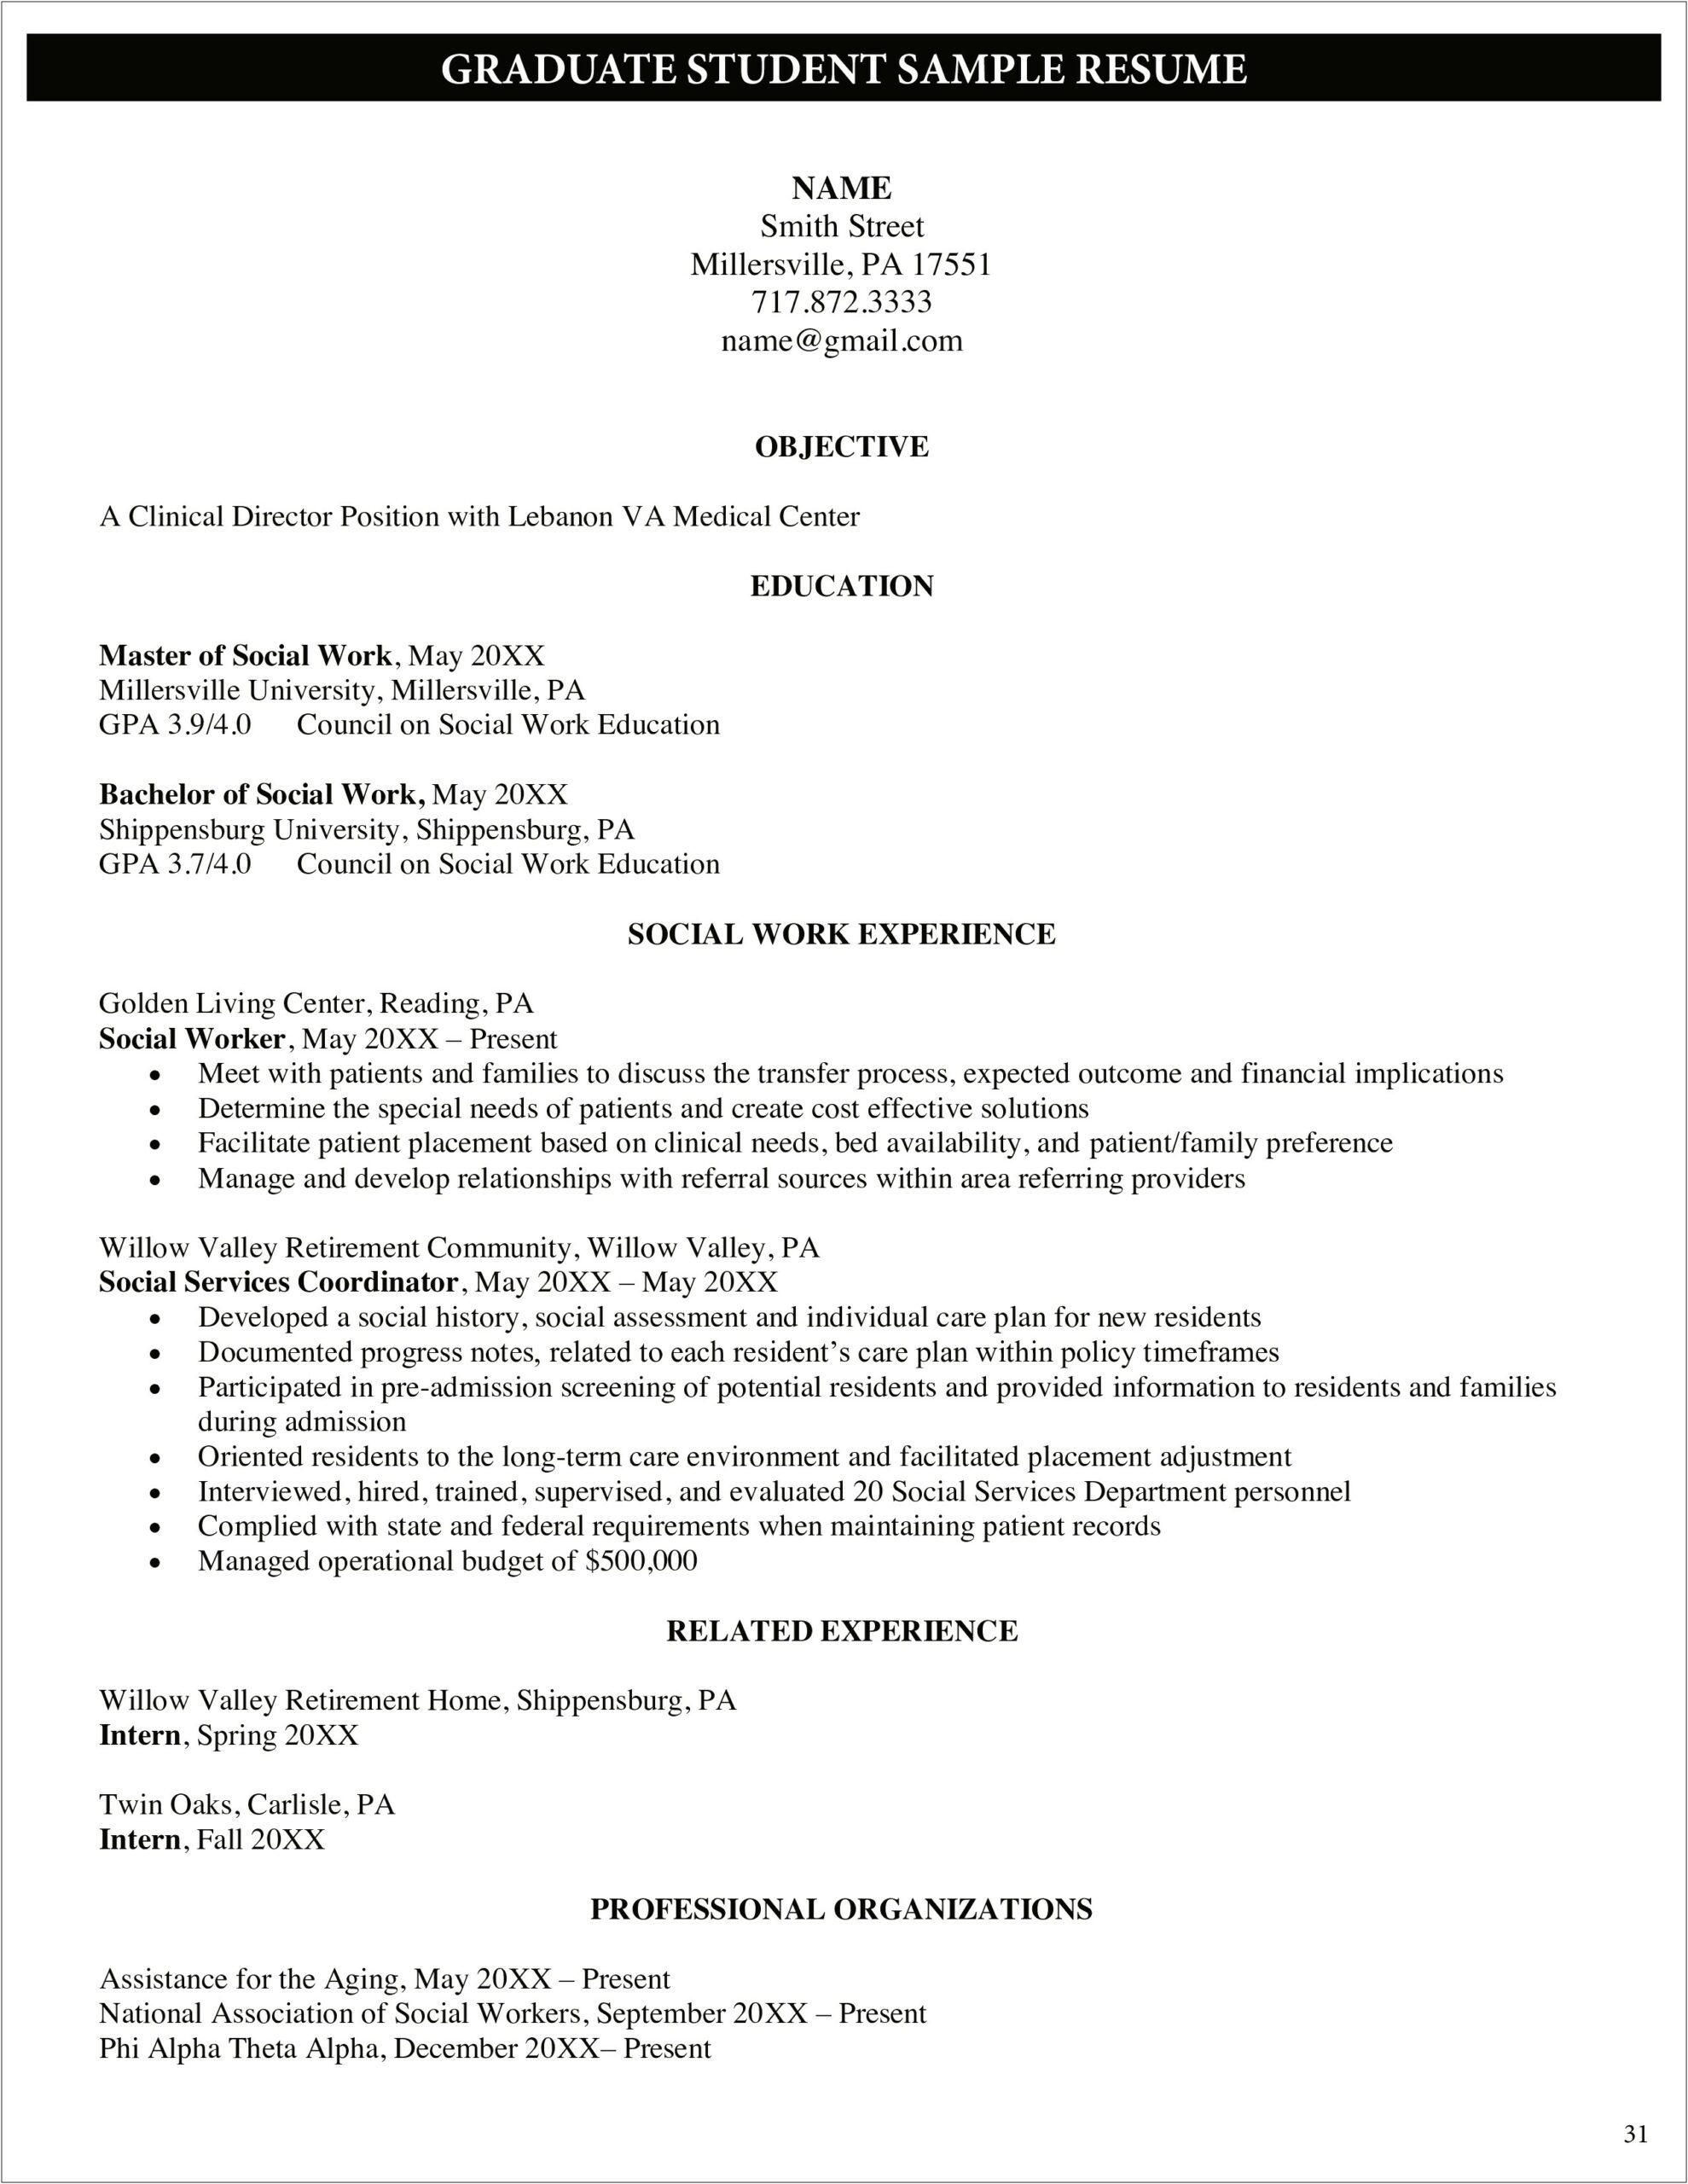 Model Resume For Medical Social Worker